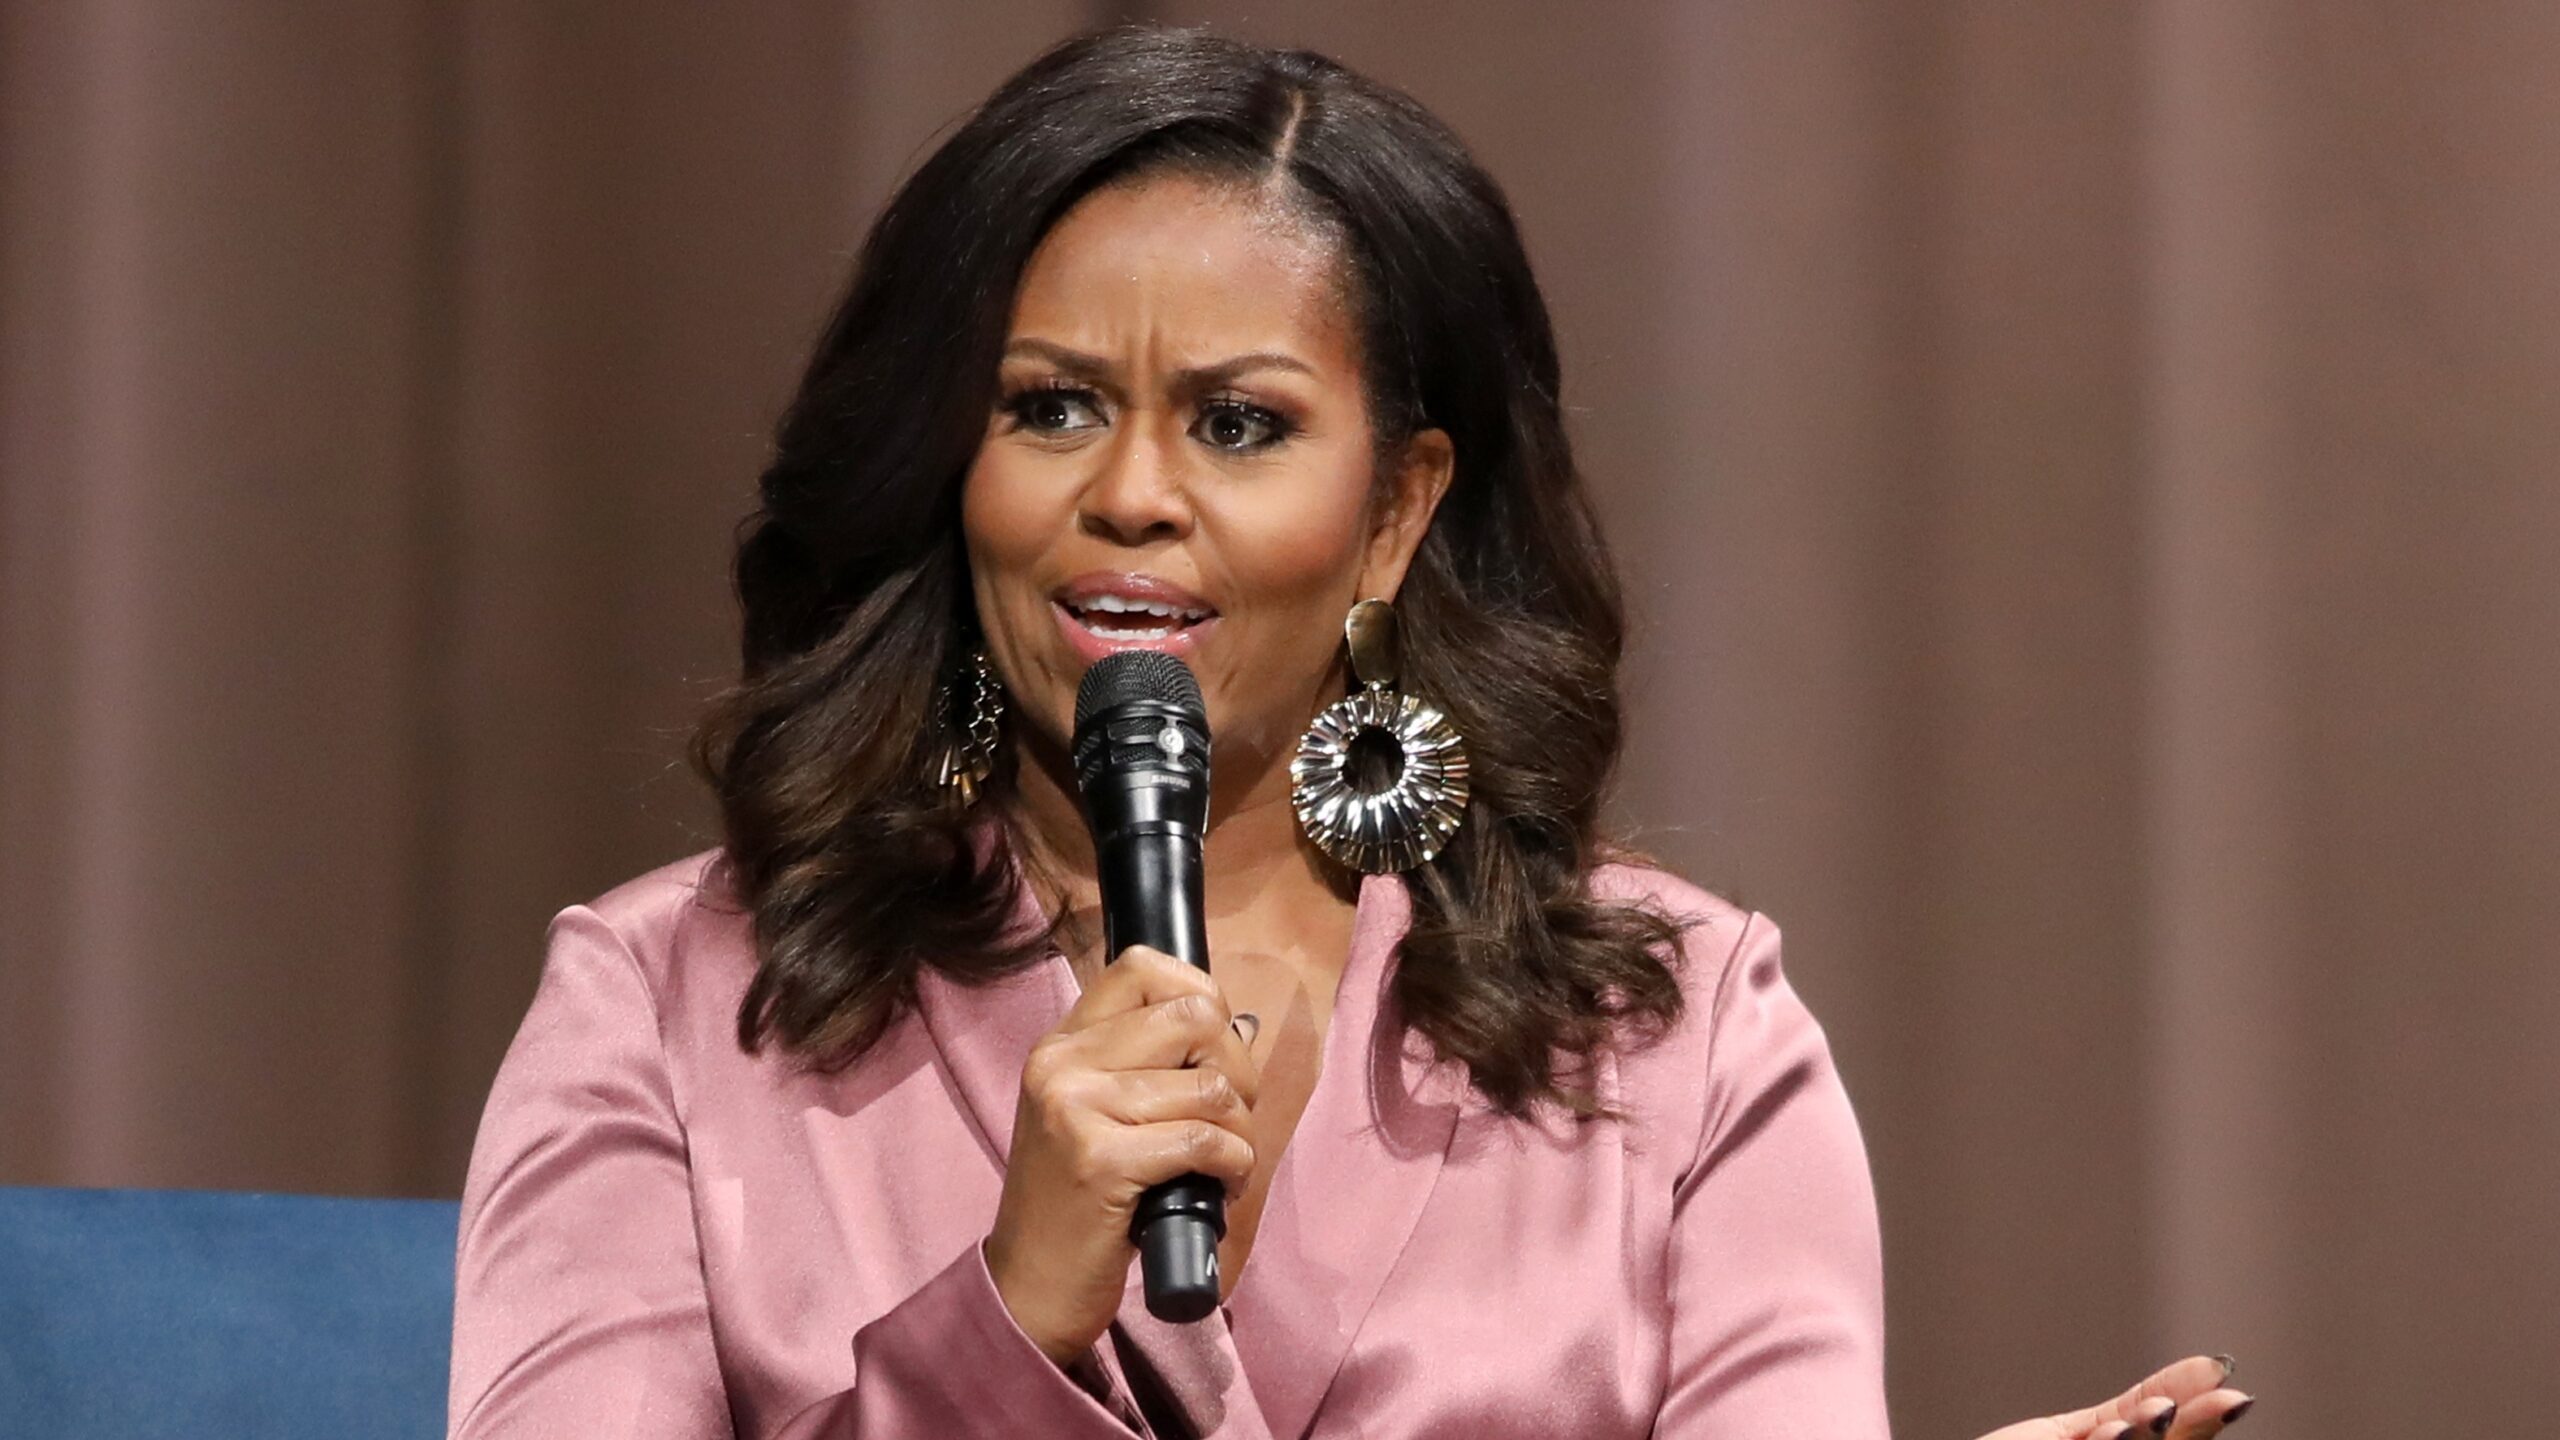 Michelle Obama Responds To ‘Horrifying Decision’ Of Roe V. Wade Overturn